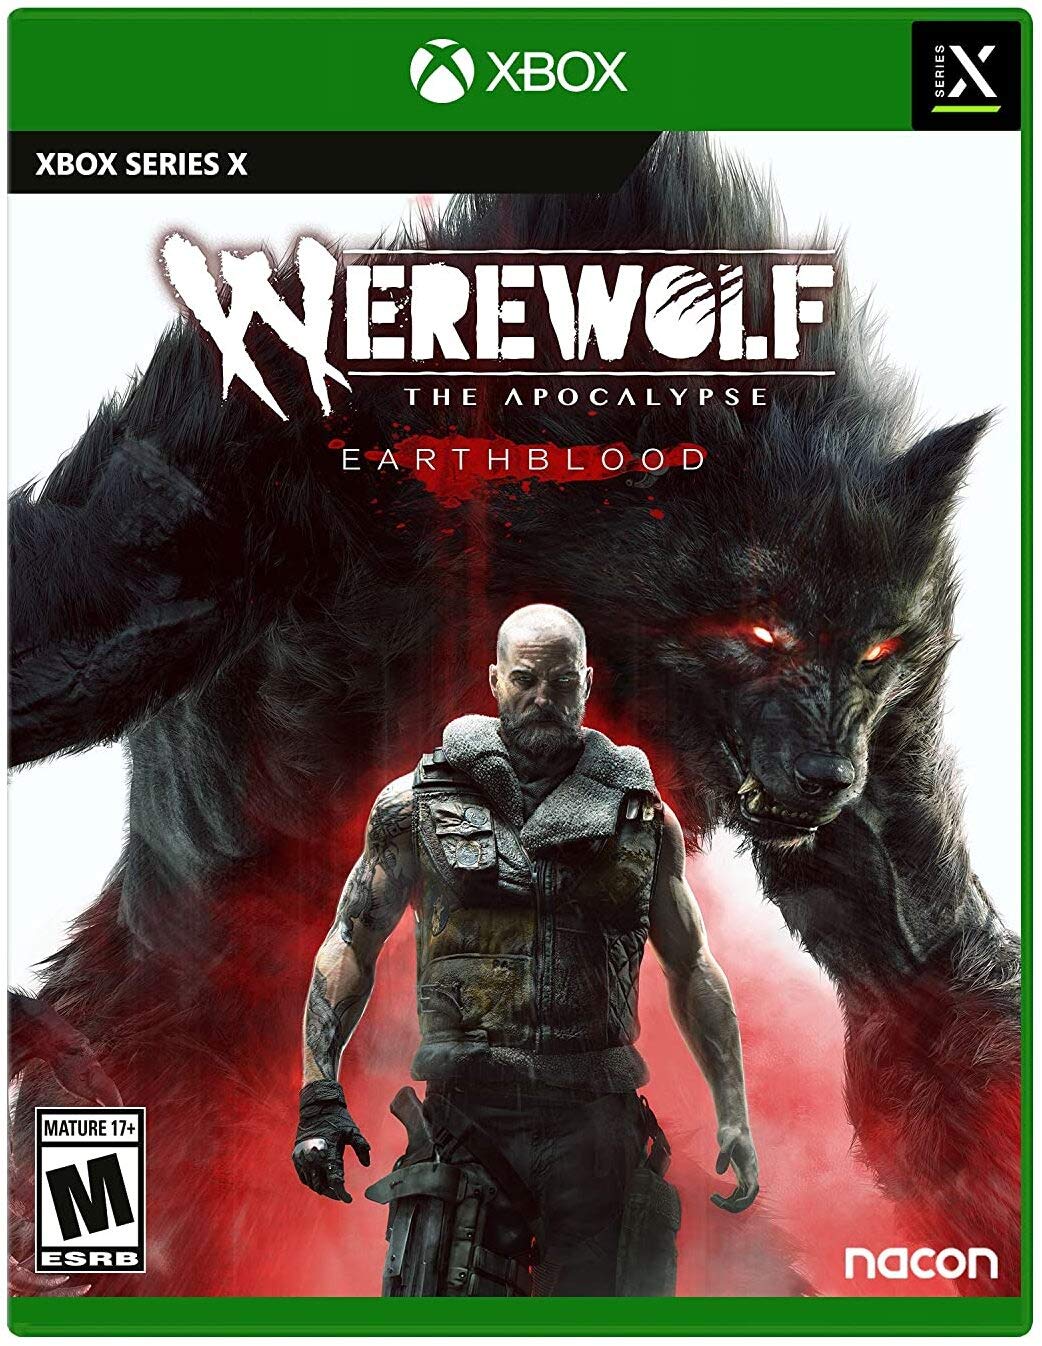 Werewolf: The Apocalypse Earthblood (Xbox X) $14 at Amazon